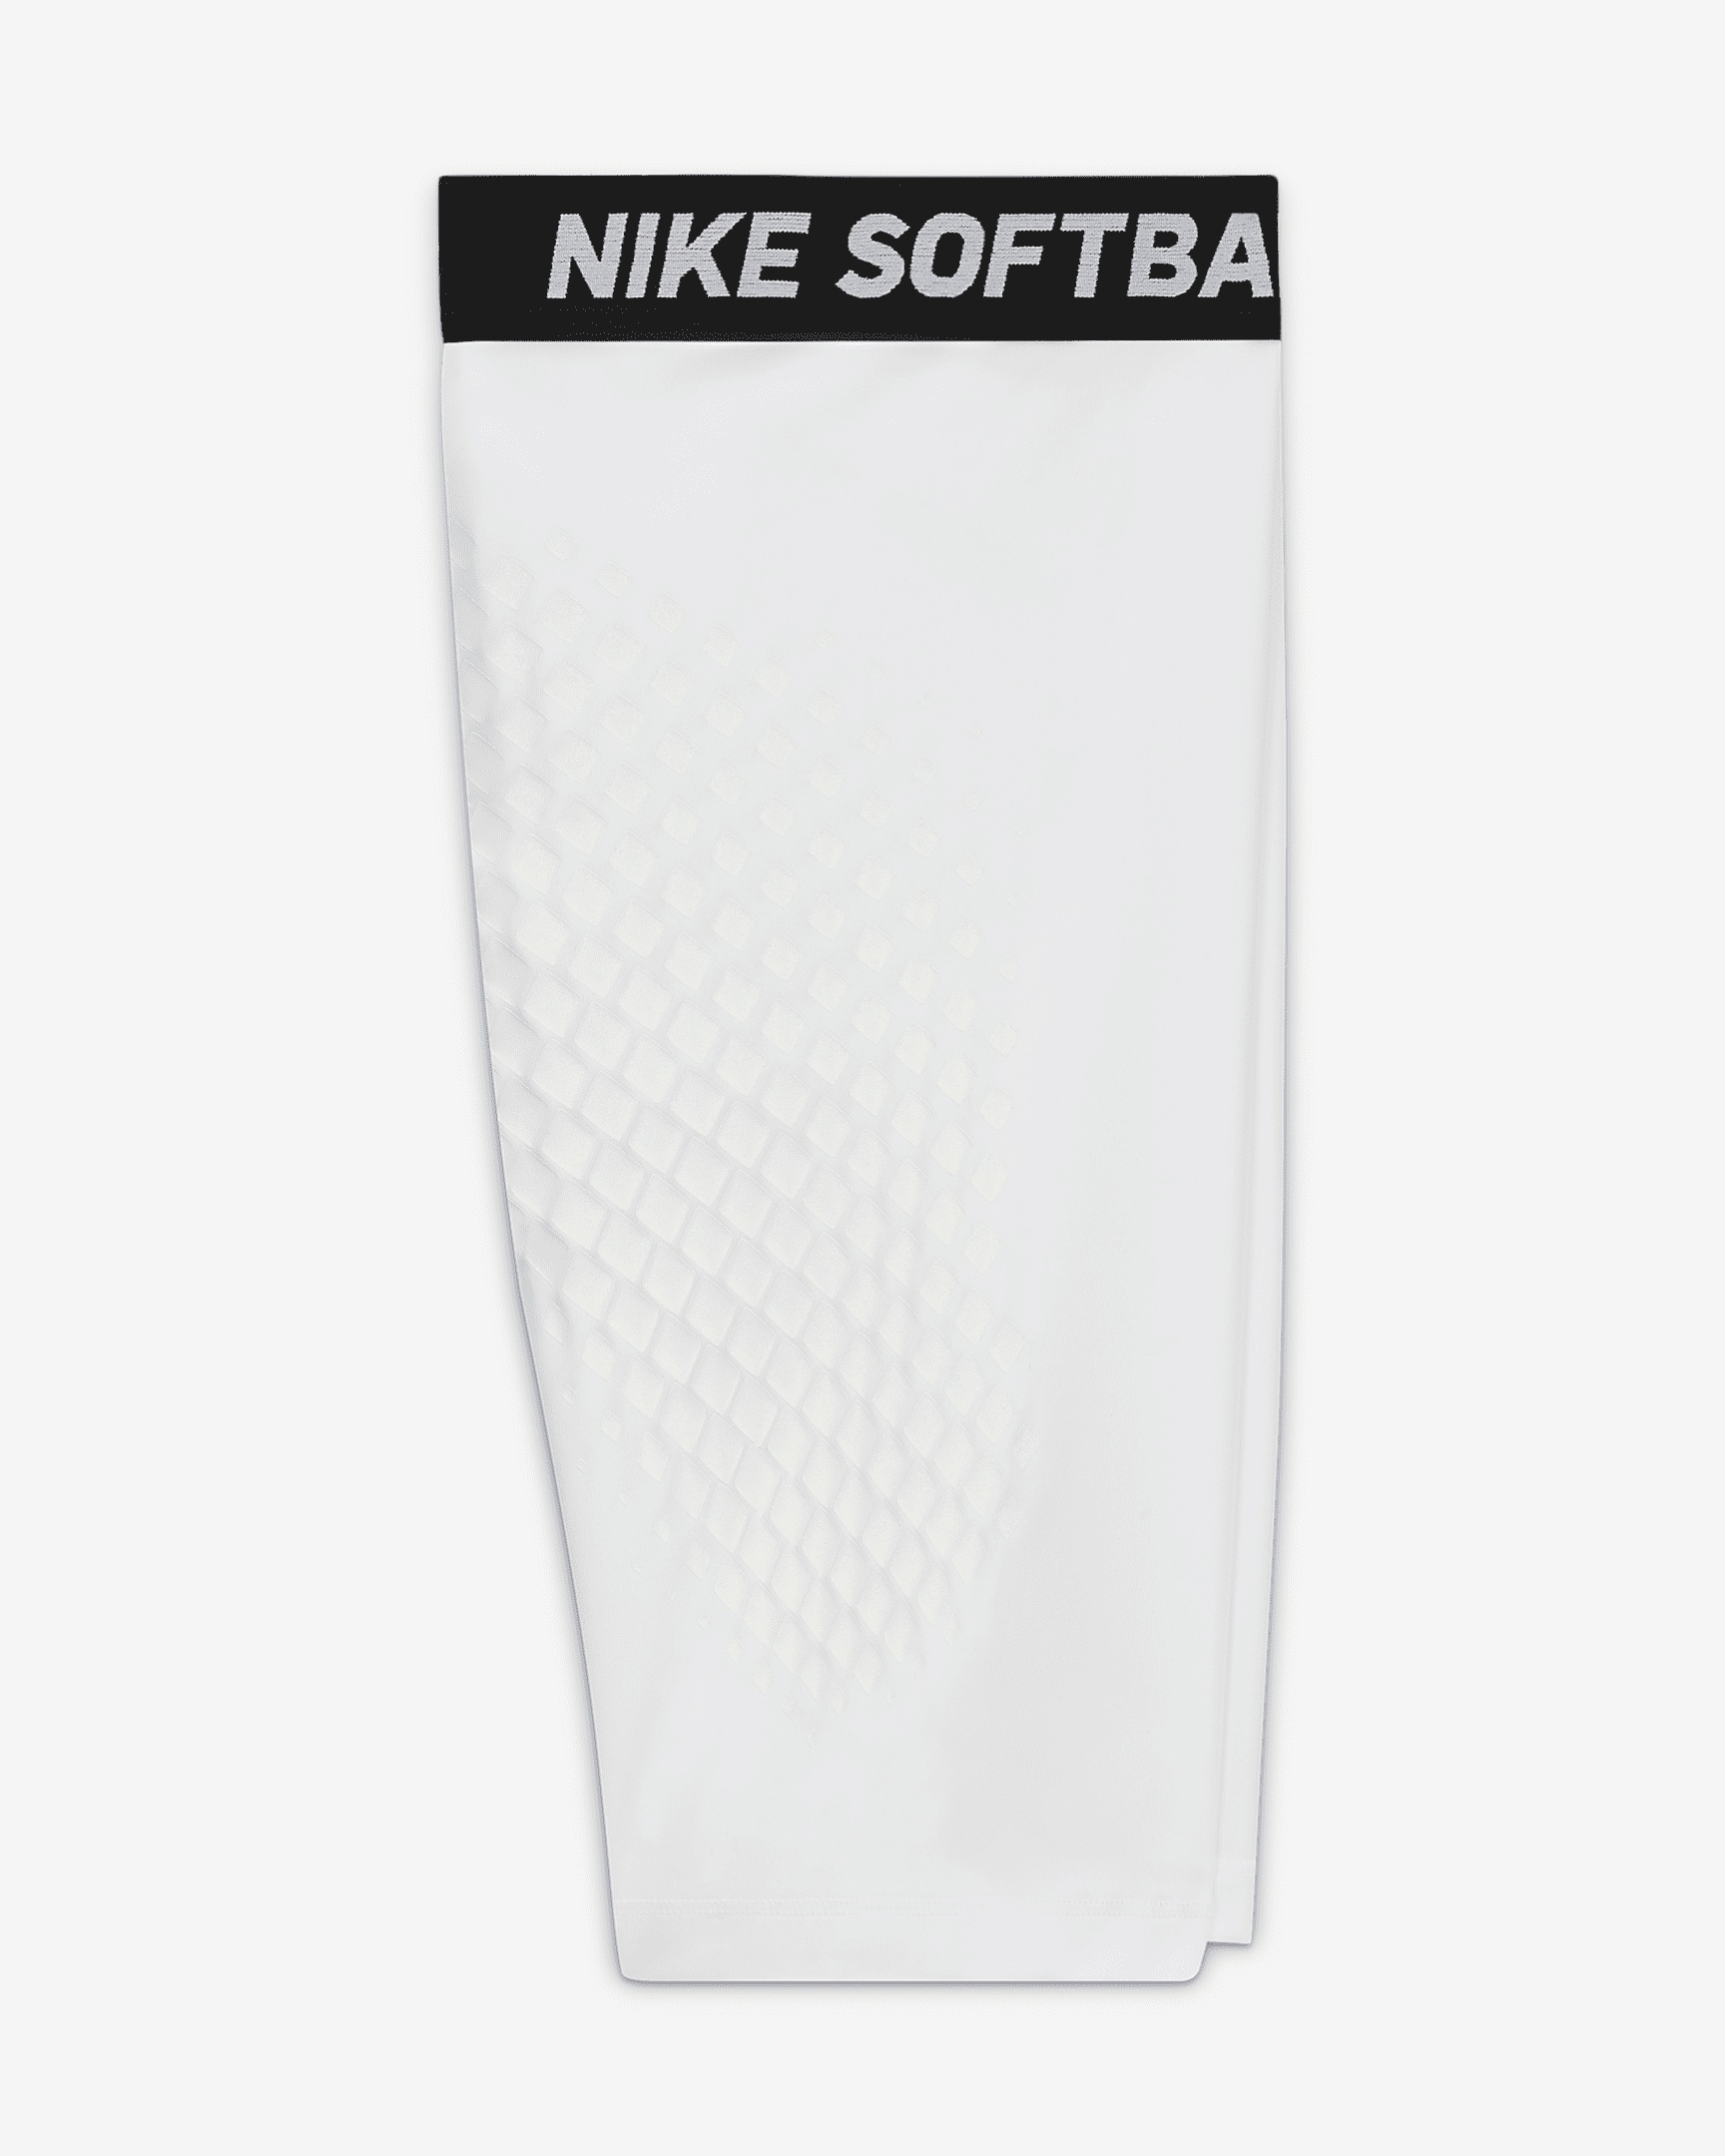 Nike Women's Slider Softball Shorts - 2